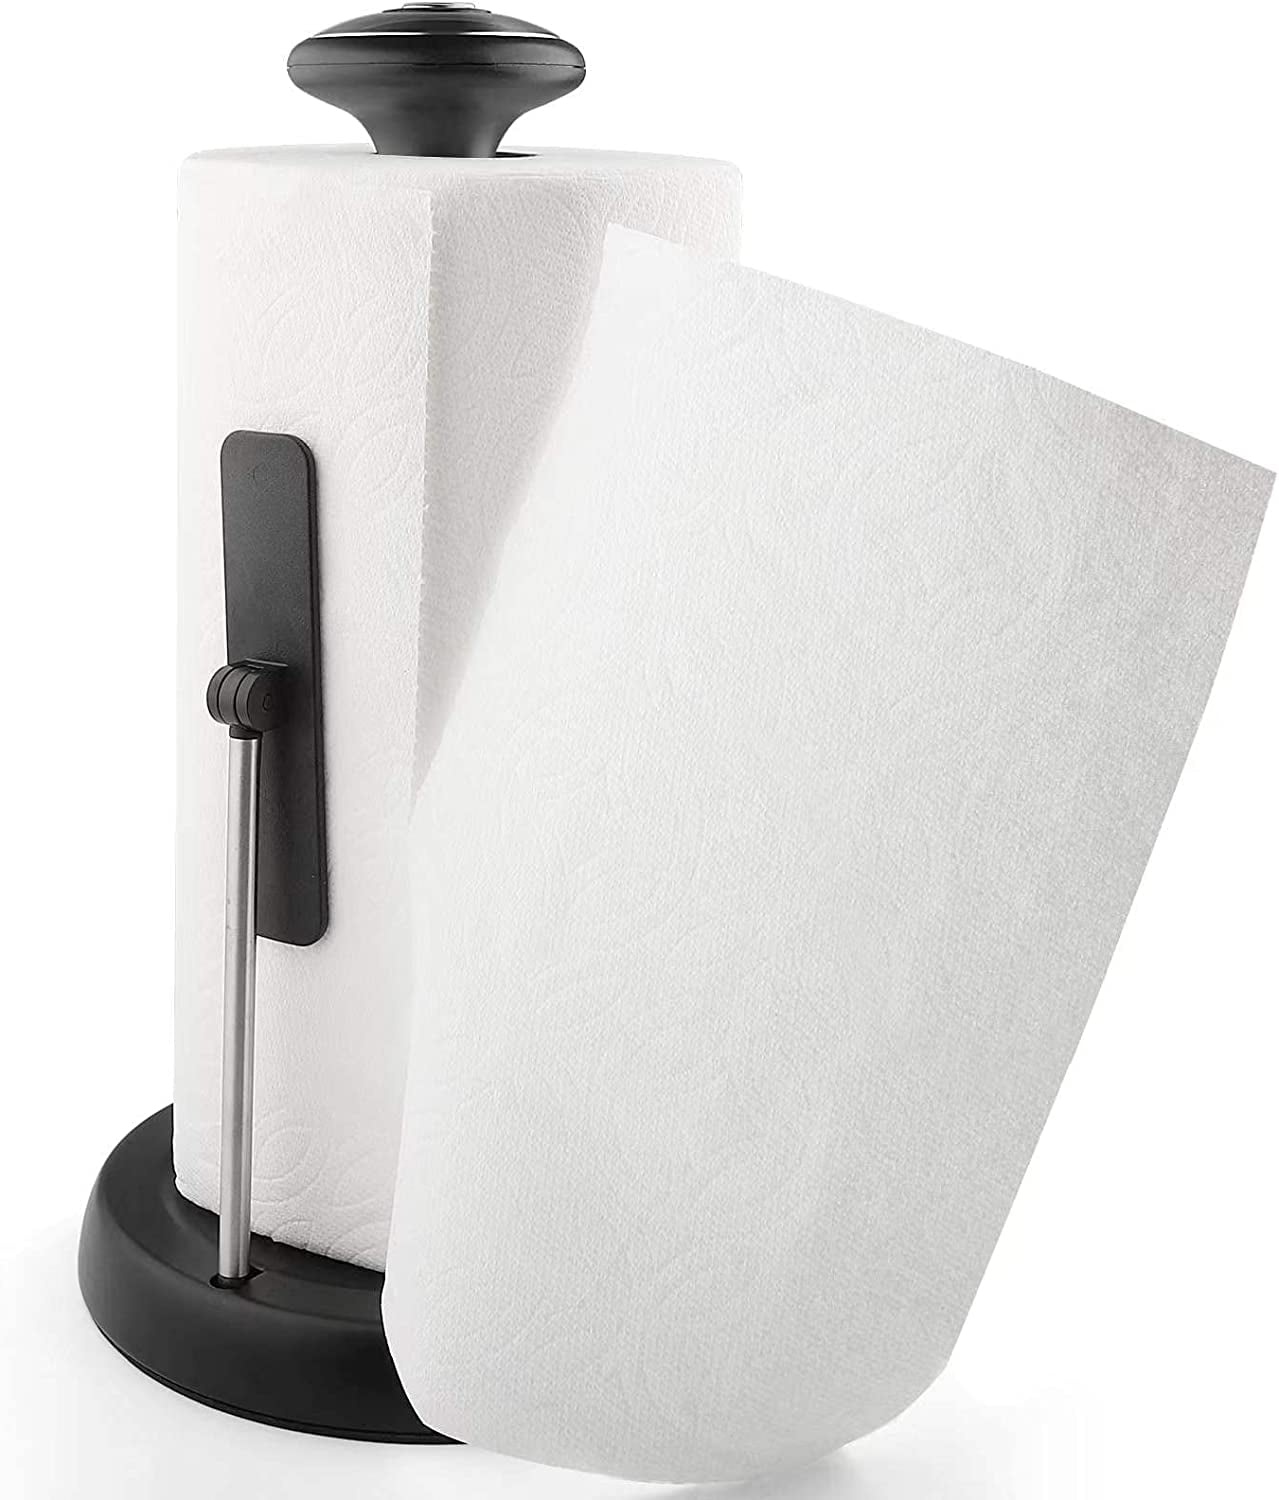 Cycodo Paper Towel Holder Countertop for Kitchen,Non-slip Base